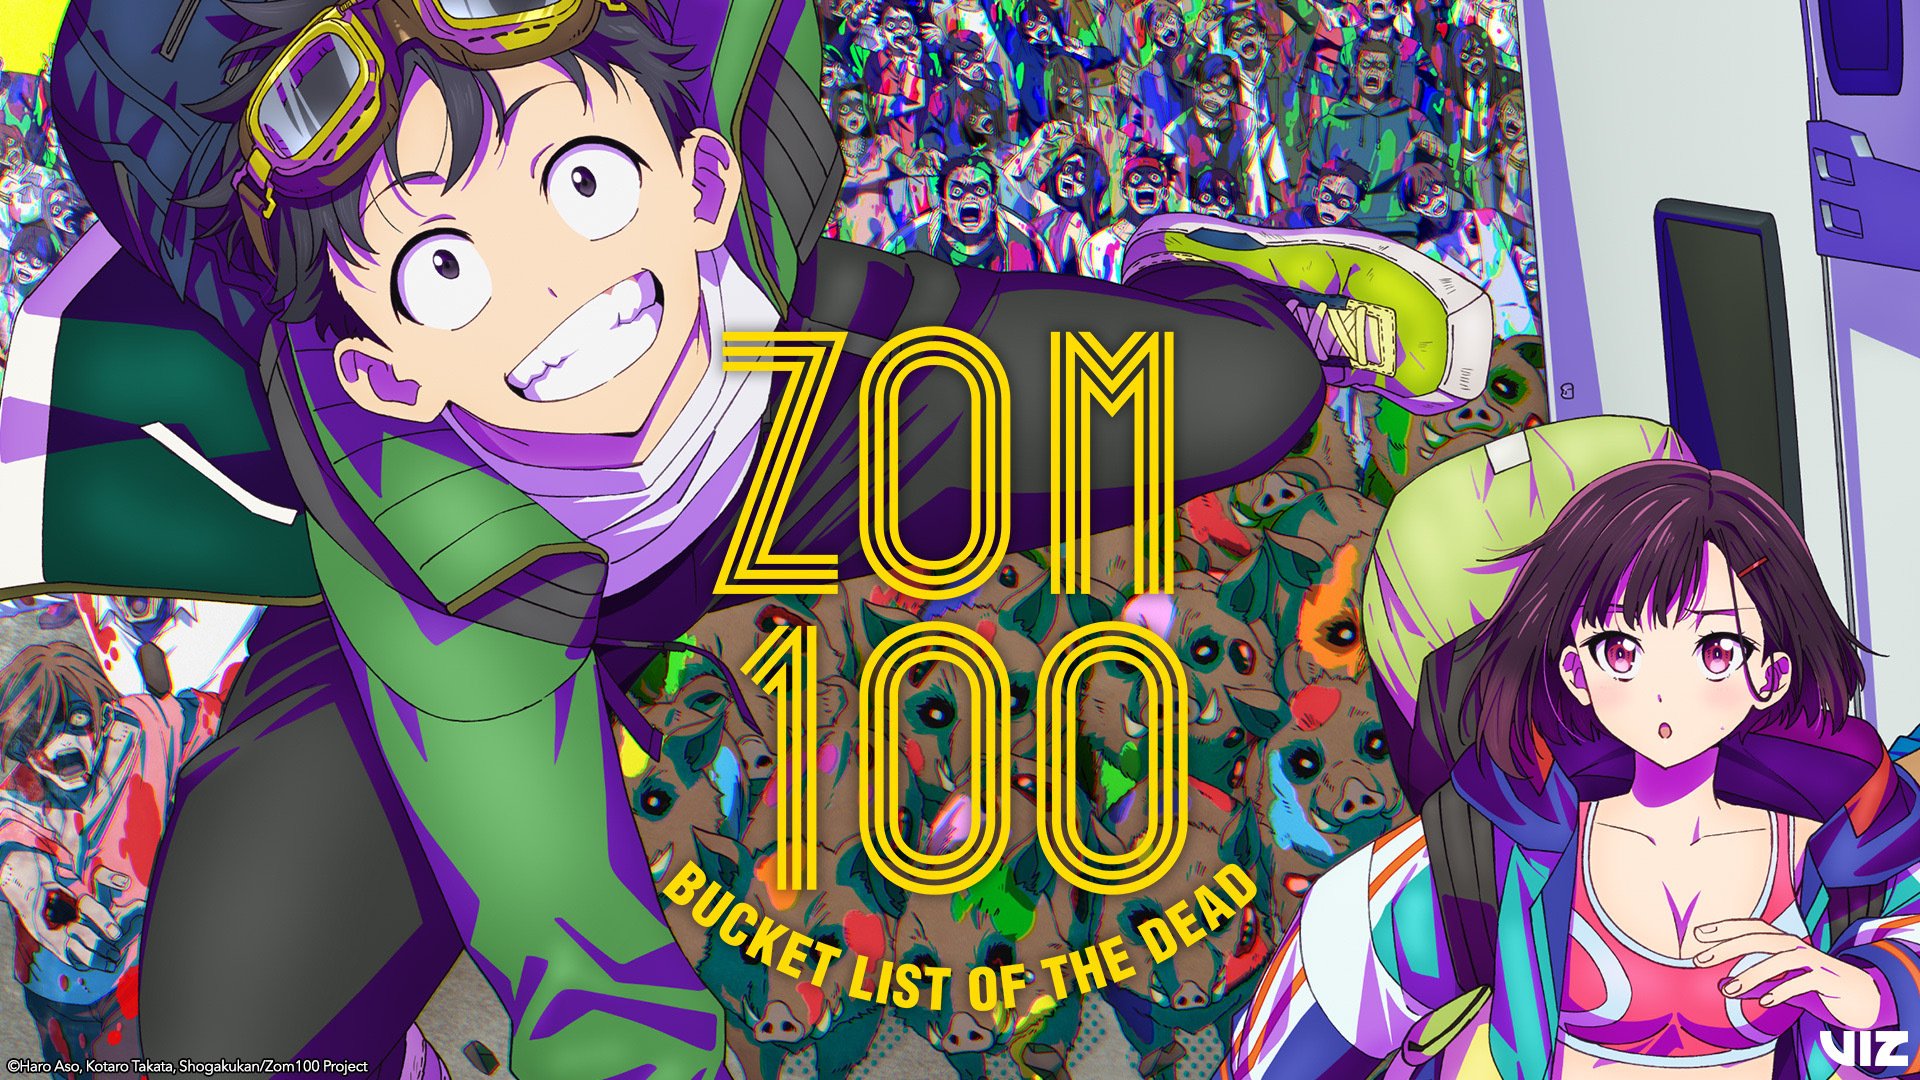 zom 100 bucket list of dead poster featuring main character akira and Shizuka Mikazuki